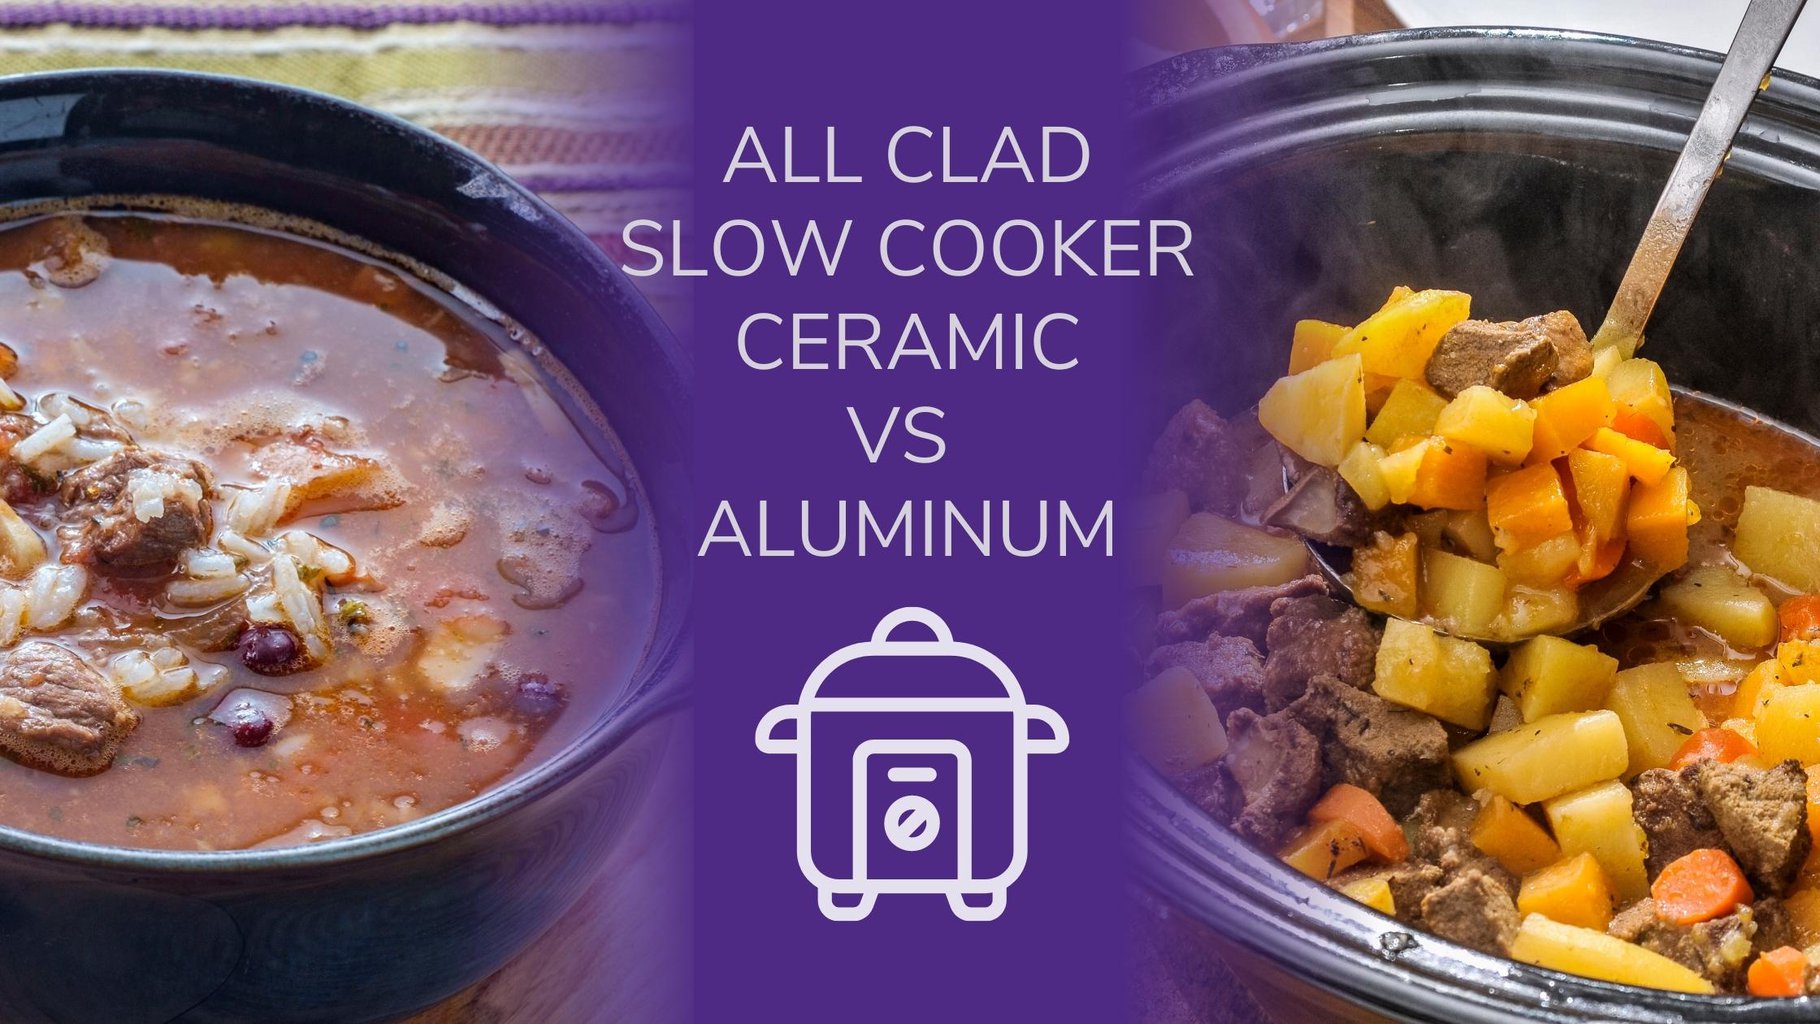 https://clankitchen.com/wp-content/uploads/2022/07/all-clad-slow-cooker-ceramic-vs-aluminum.jpg